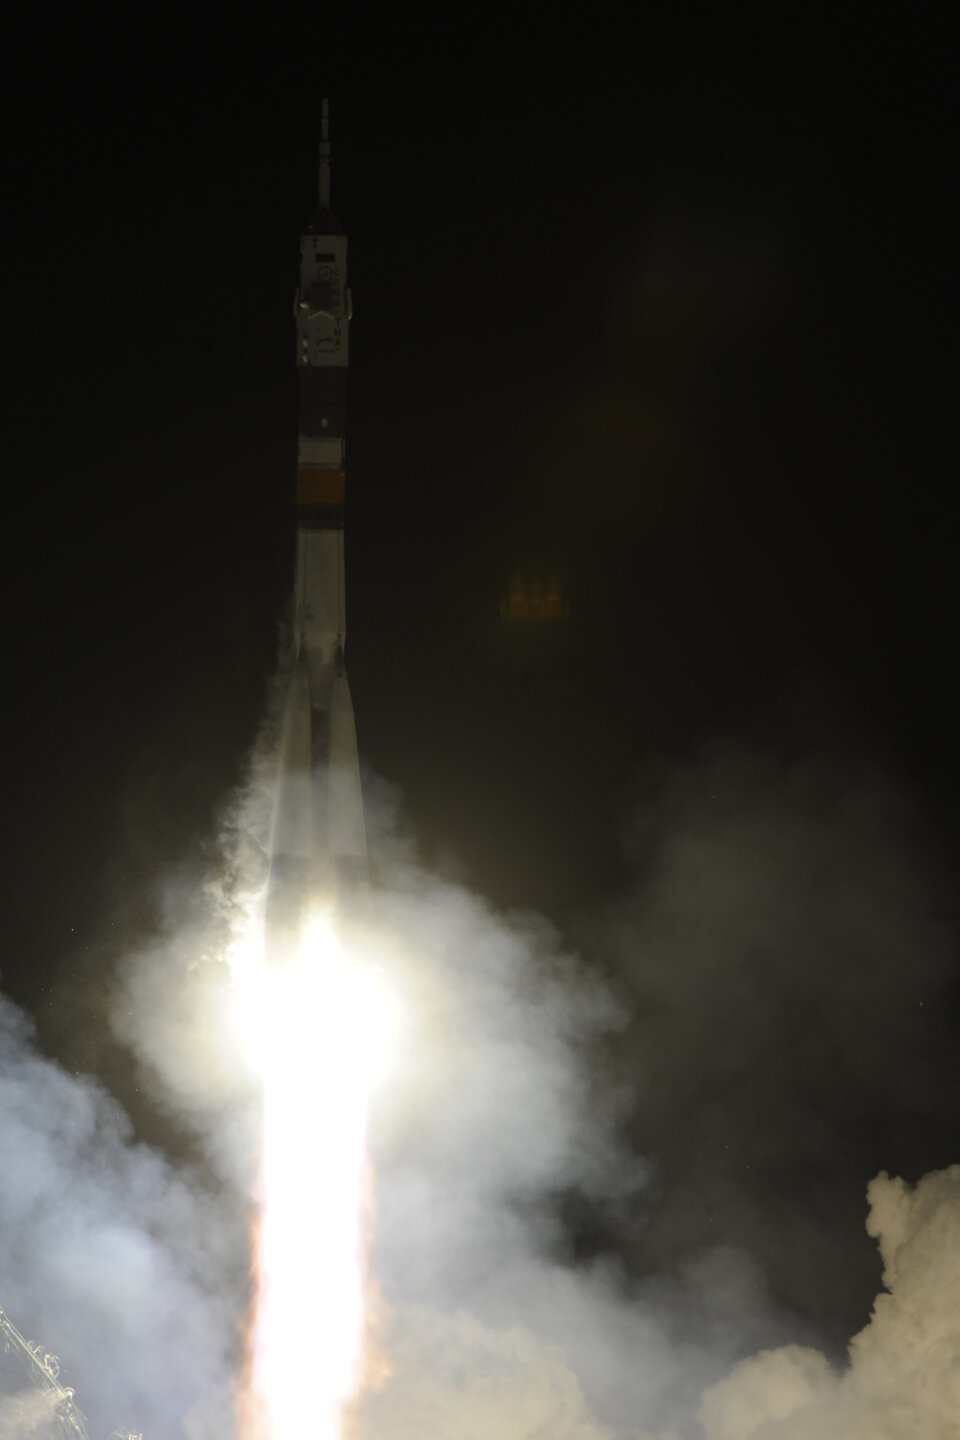 PromISSe launch on Soyuz